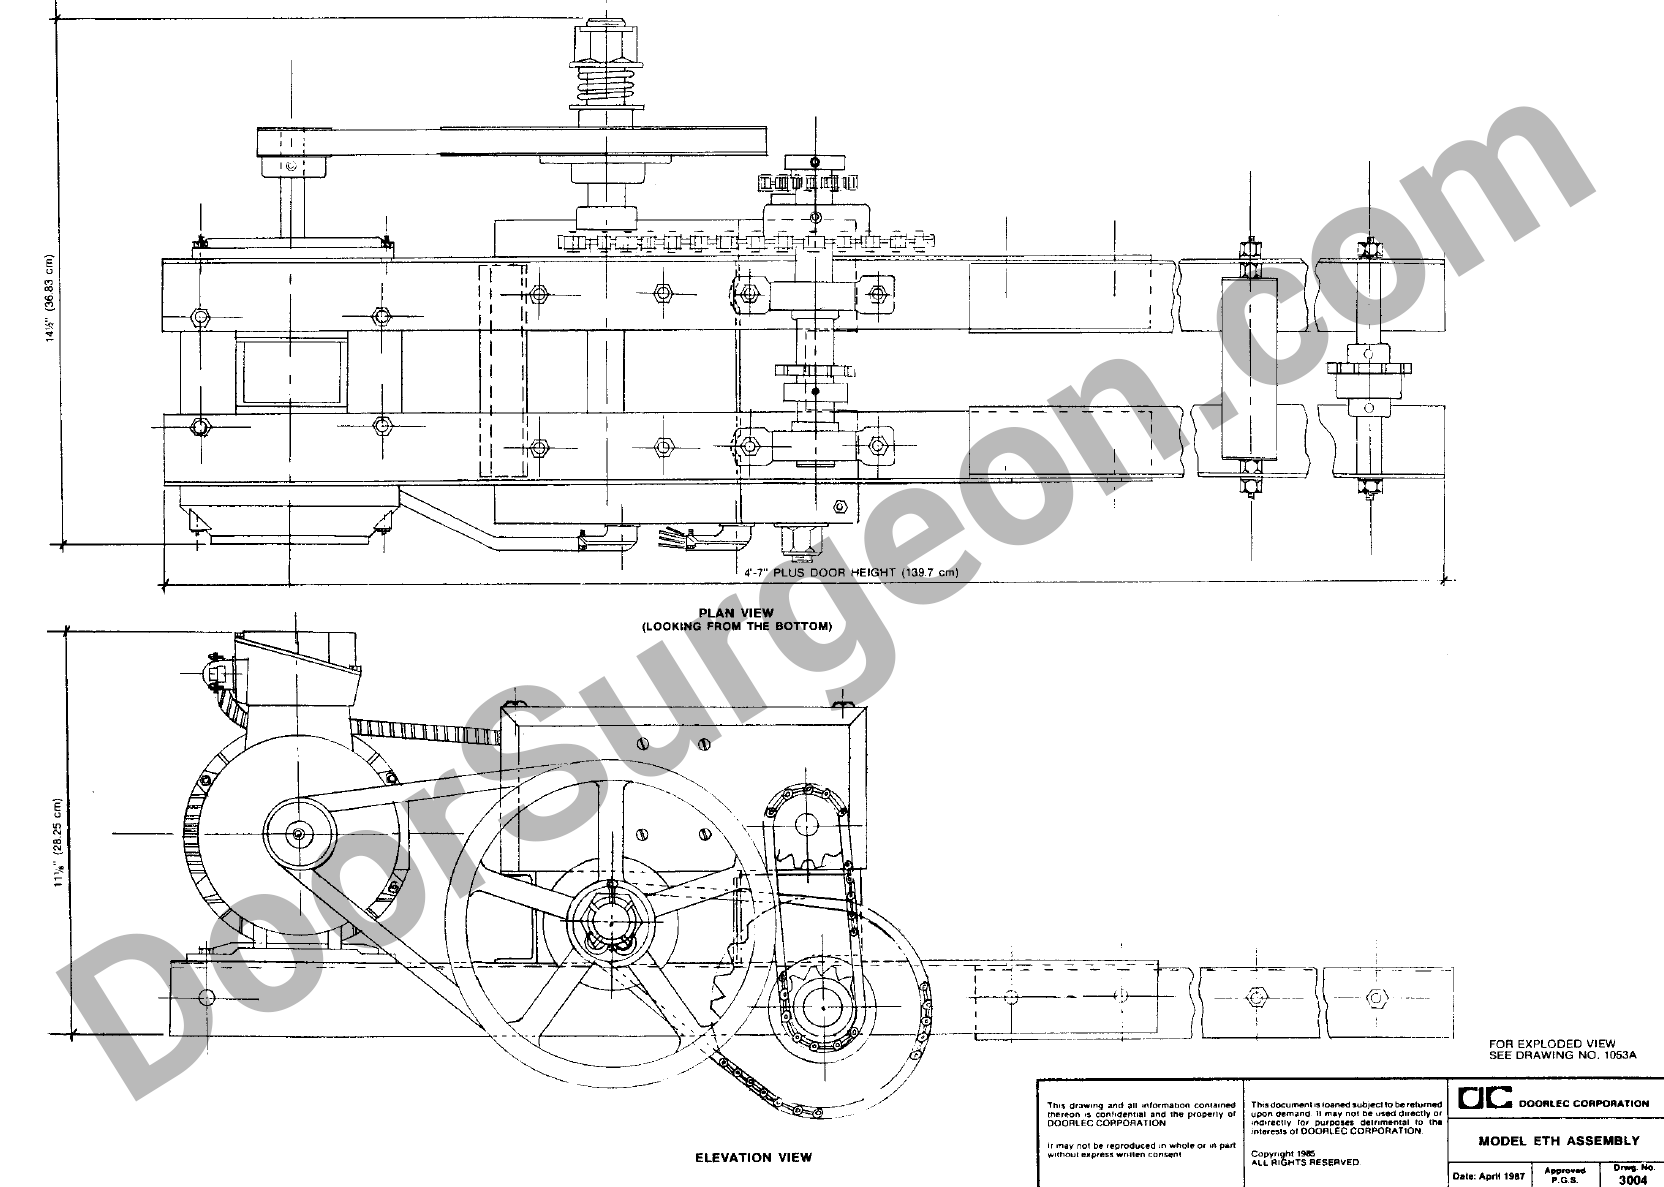 Doorlec ETH specifications drawings.